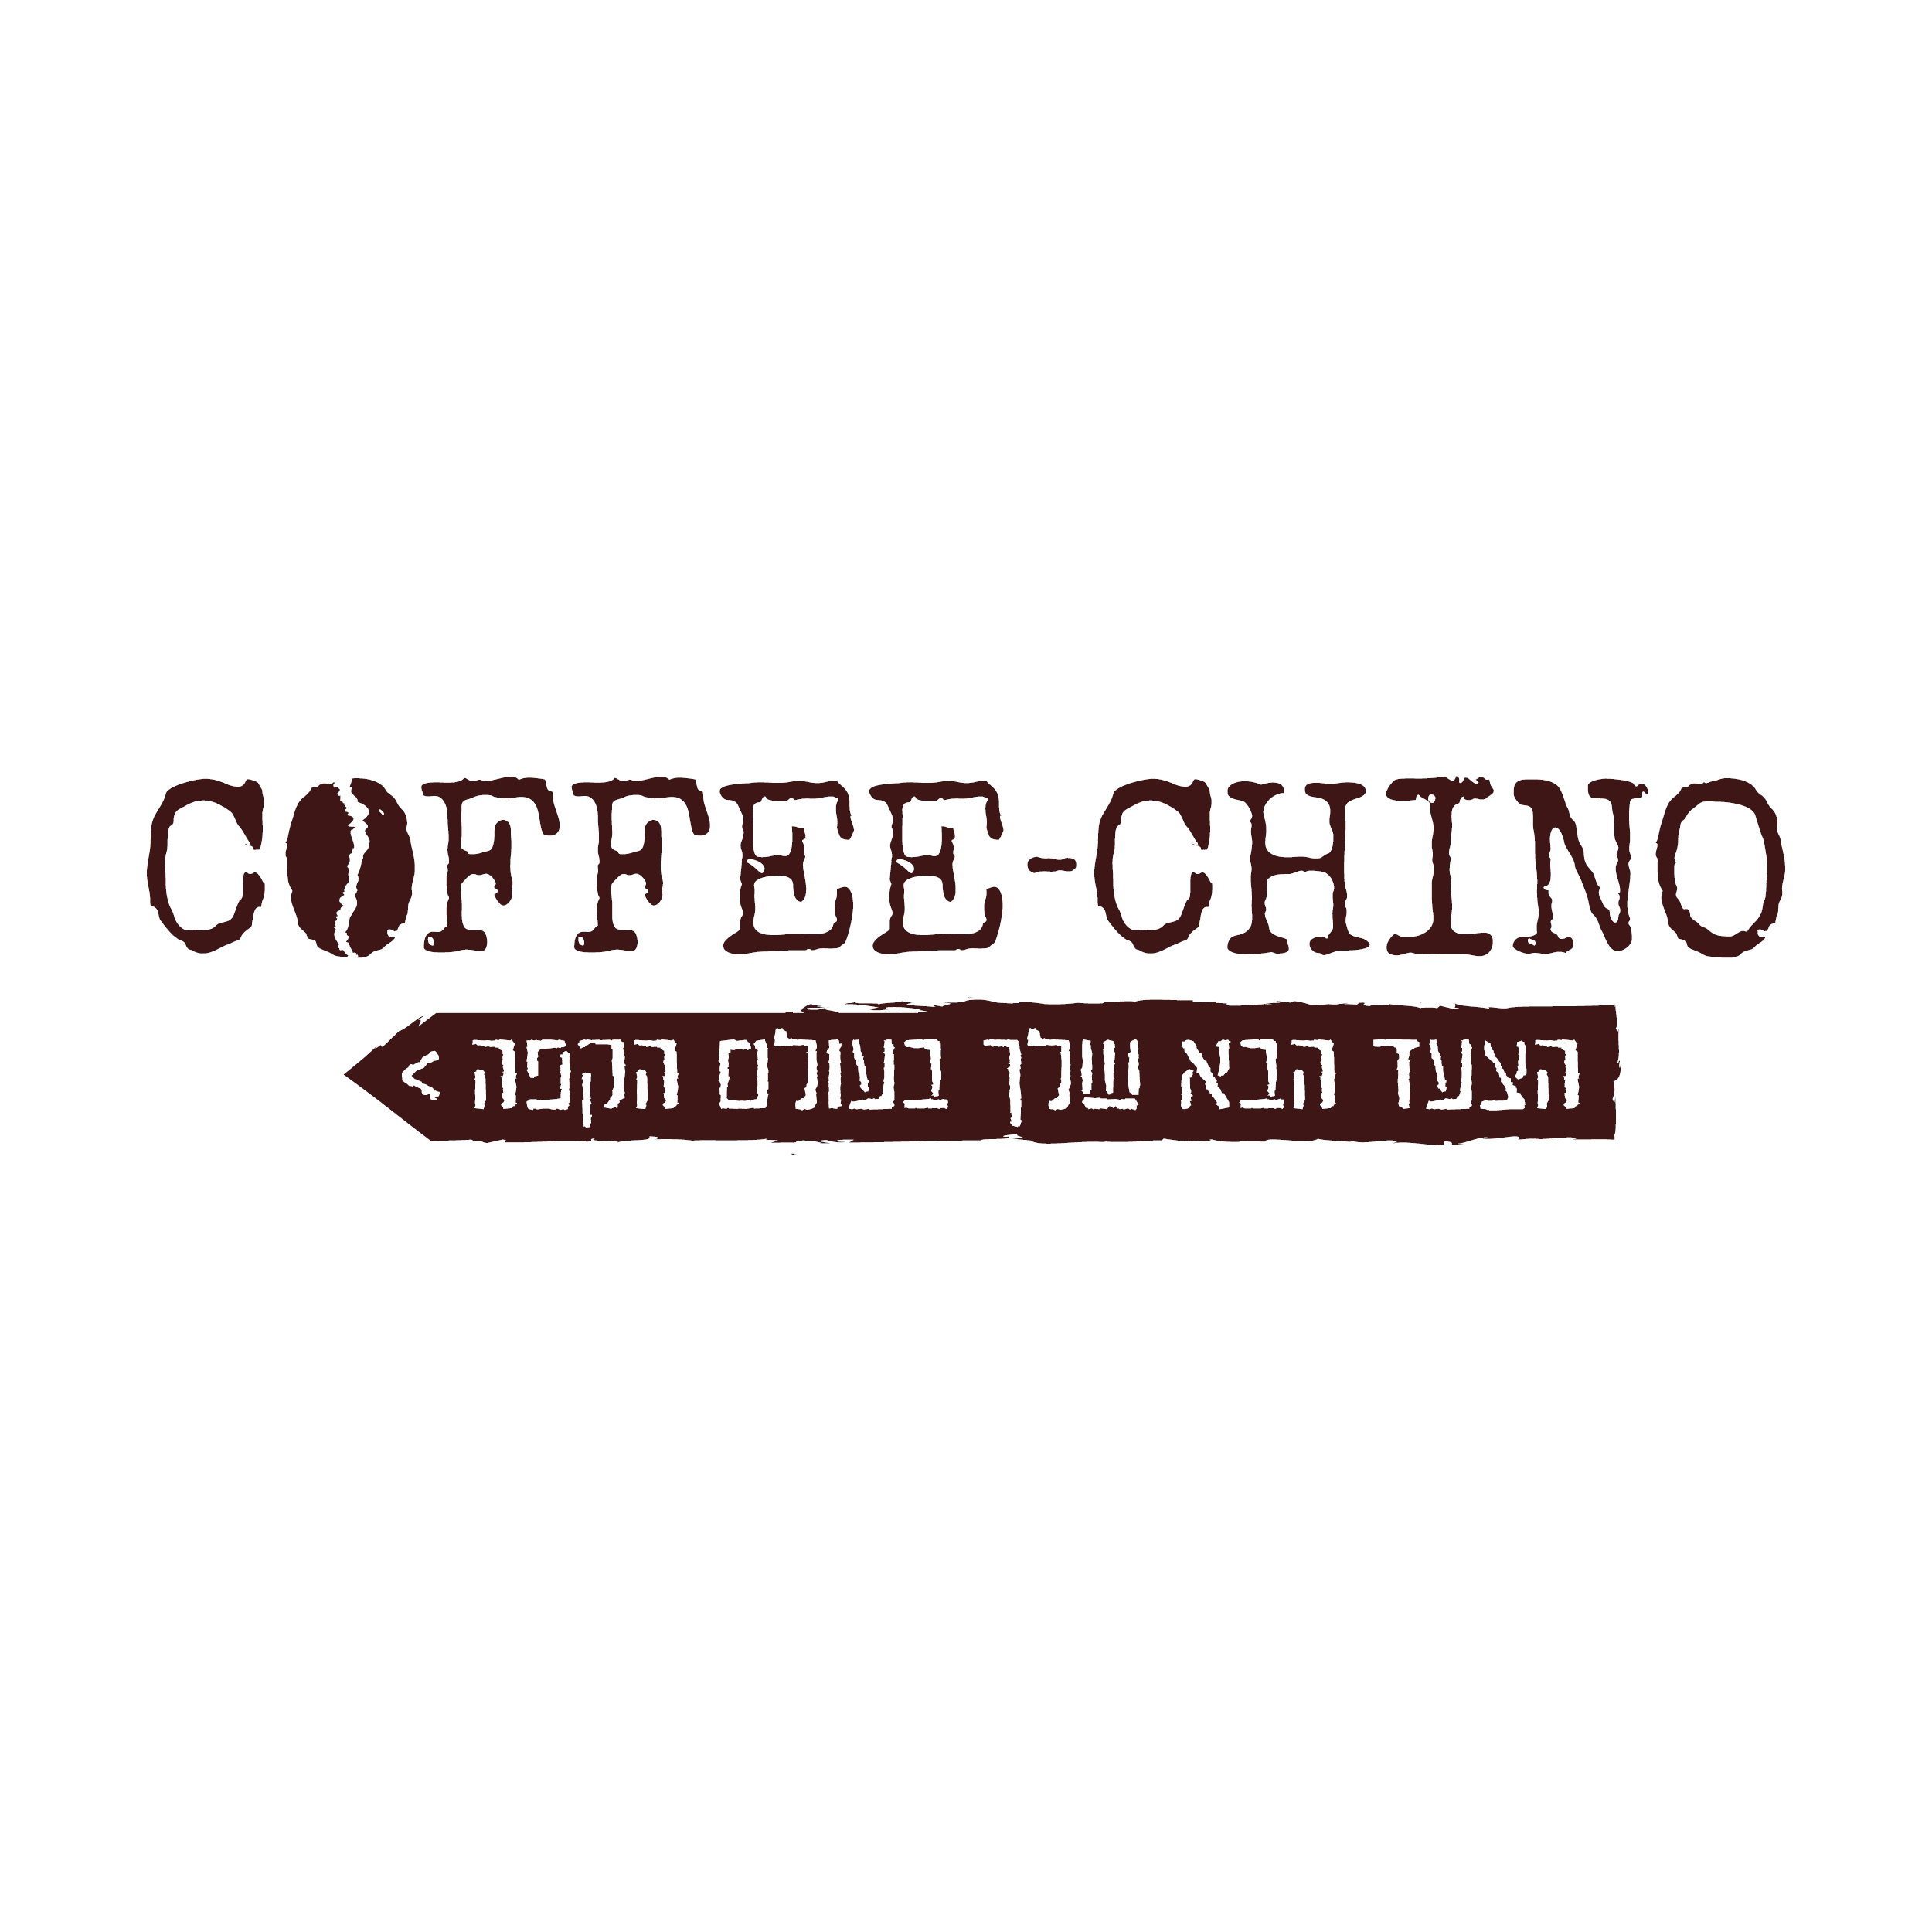  ` coffee-chino